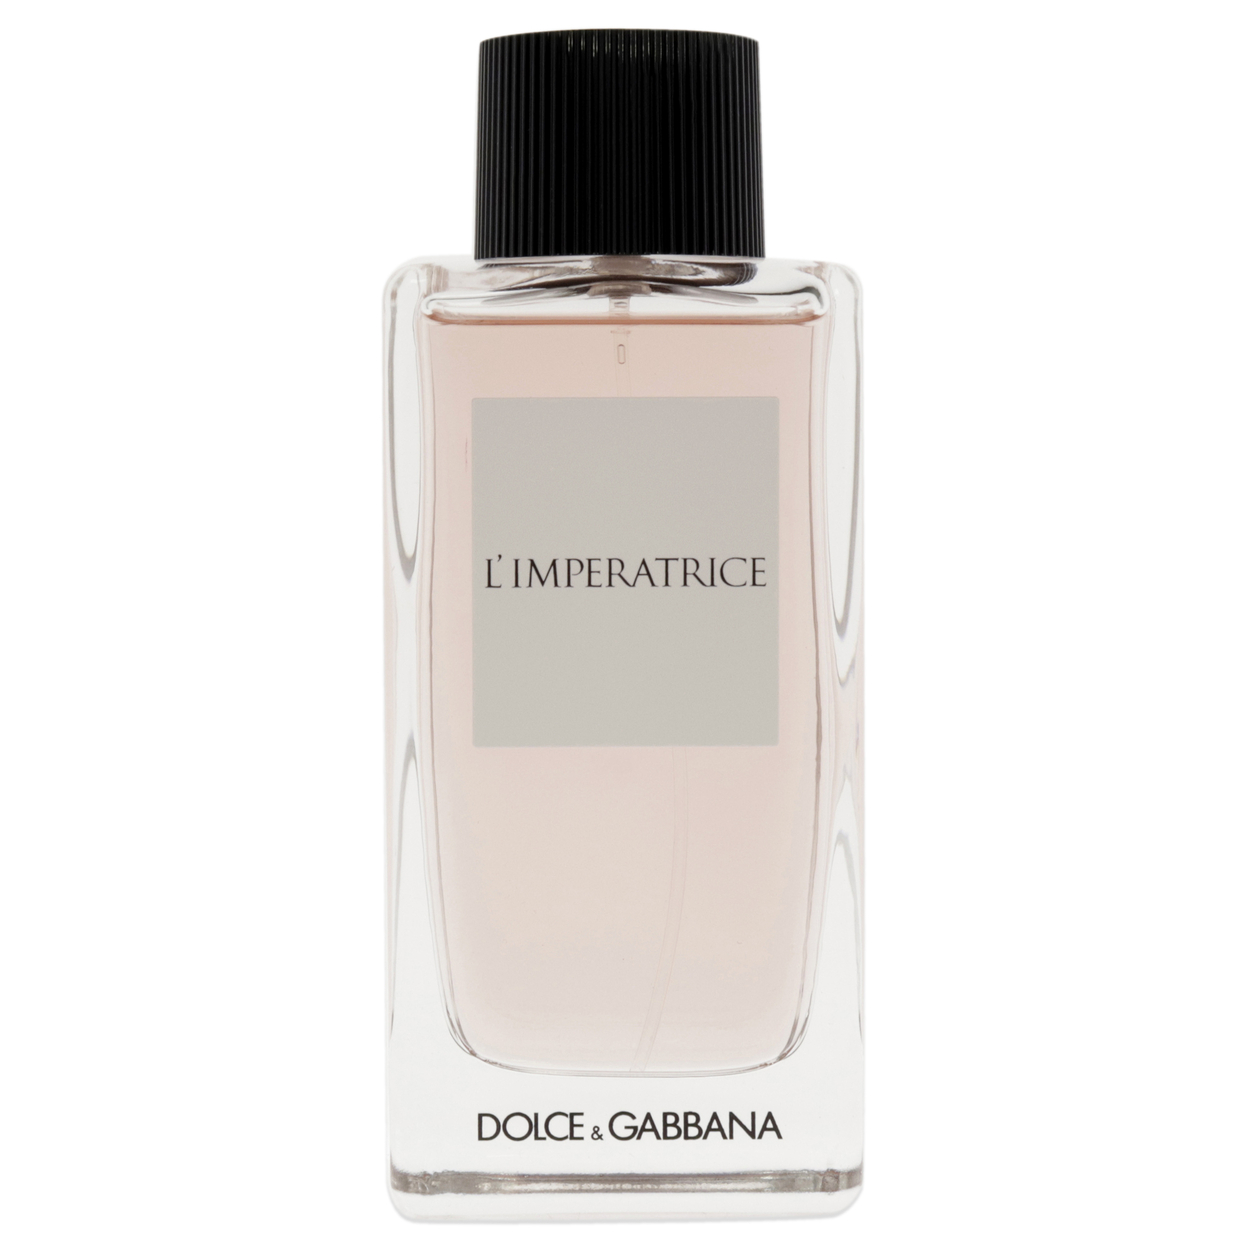 Dolce & Gabbana Limperatrice EDT Spray 3.4 Oz